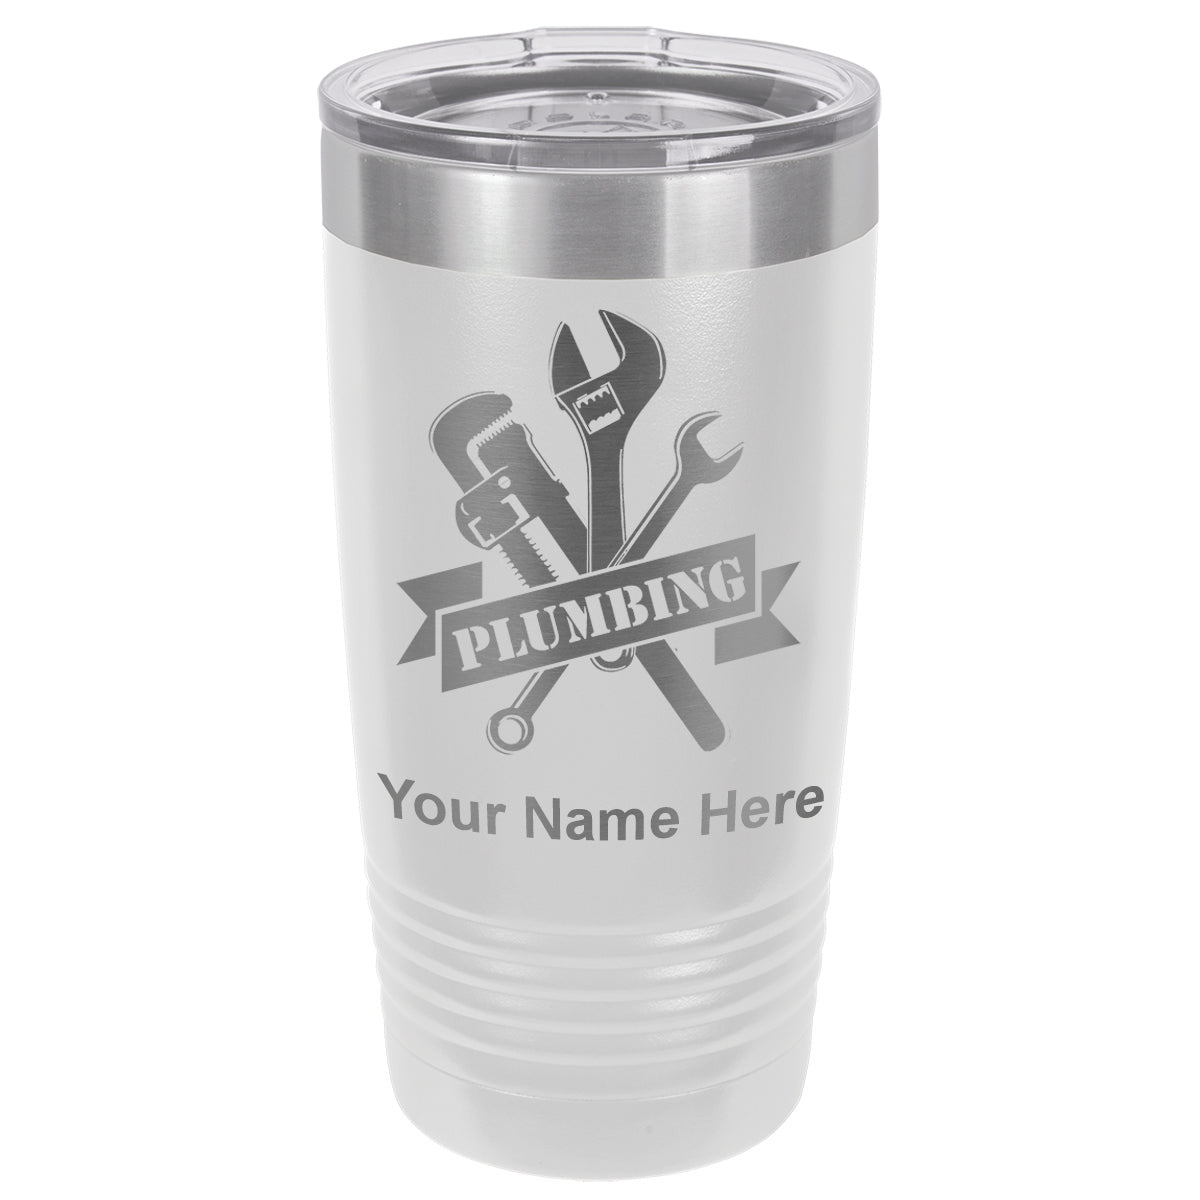 20oz Vacuum Insulated Tumbler Mug, Plumbing, Personalized Engraving Included